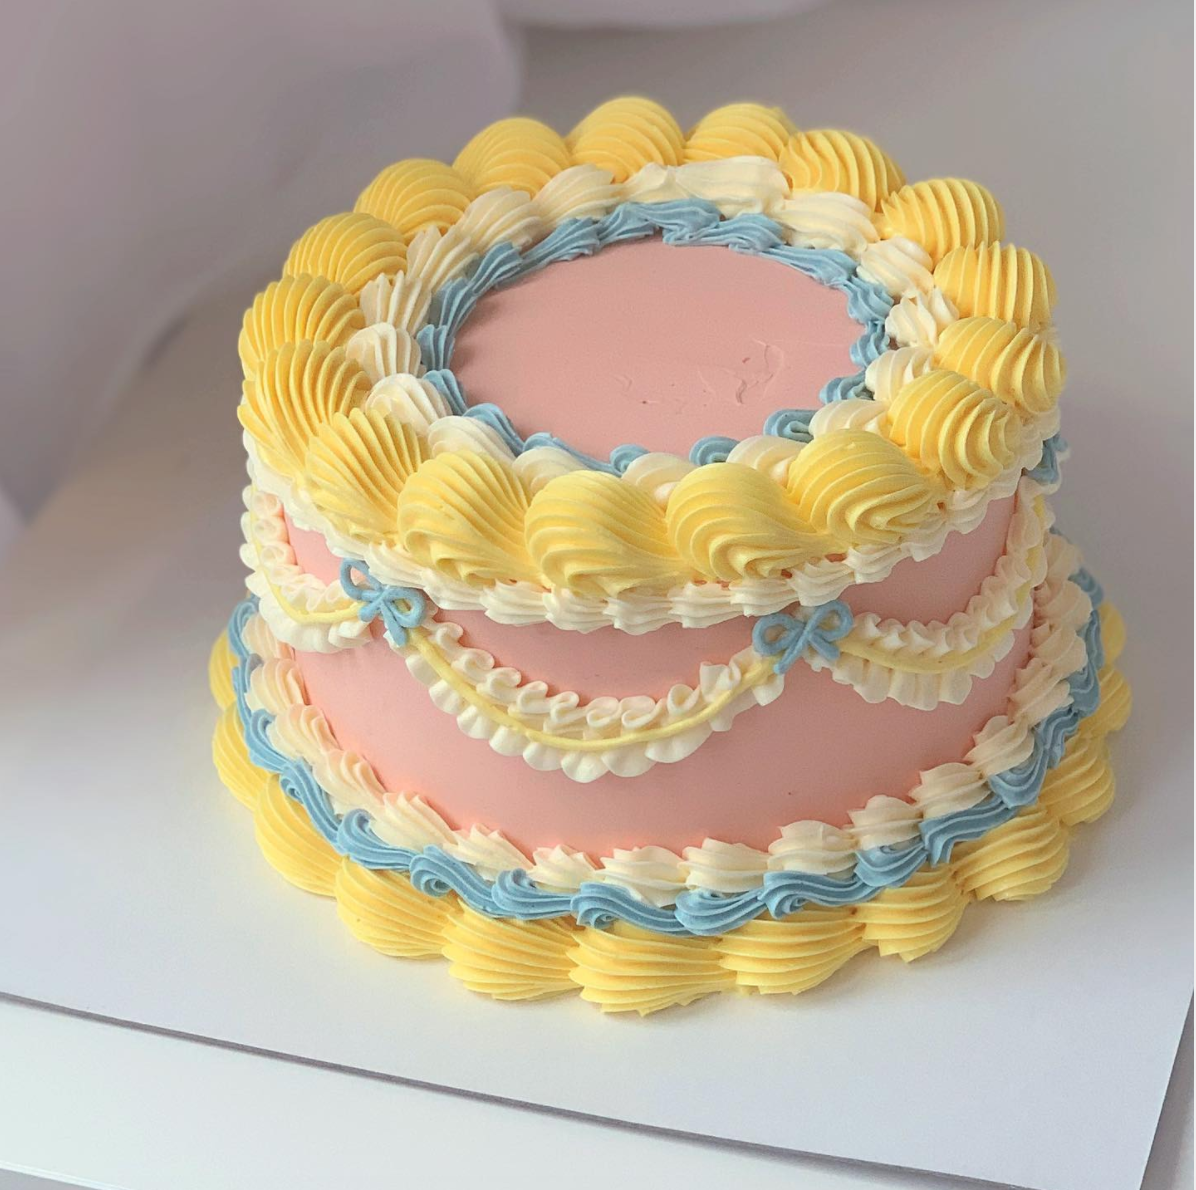 Birthday Cake 67 - Aggie's Bakery & Cake Shop